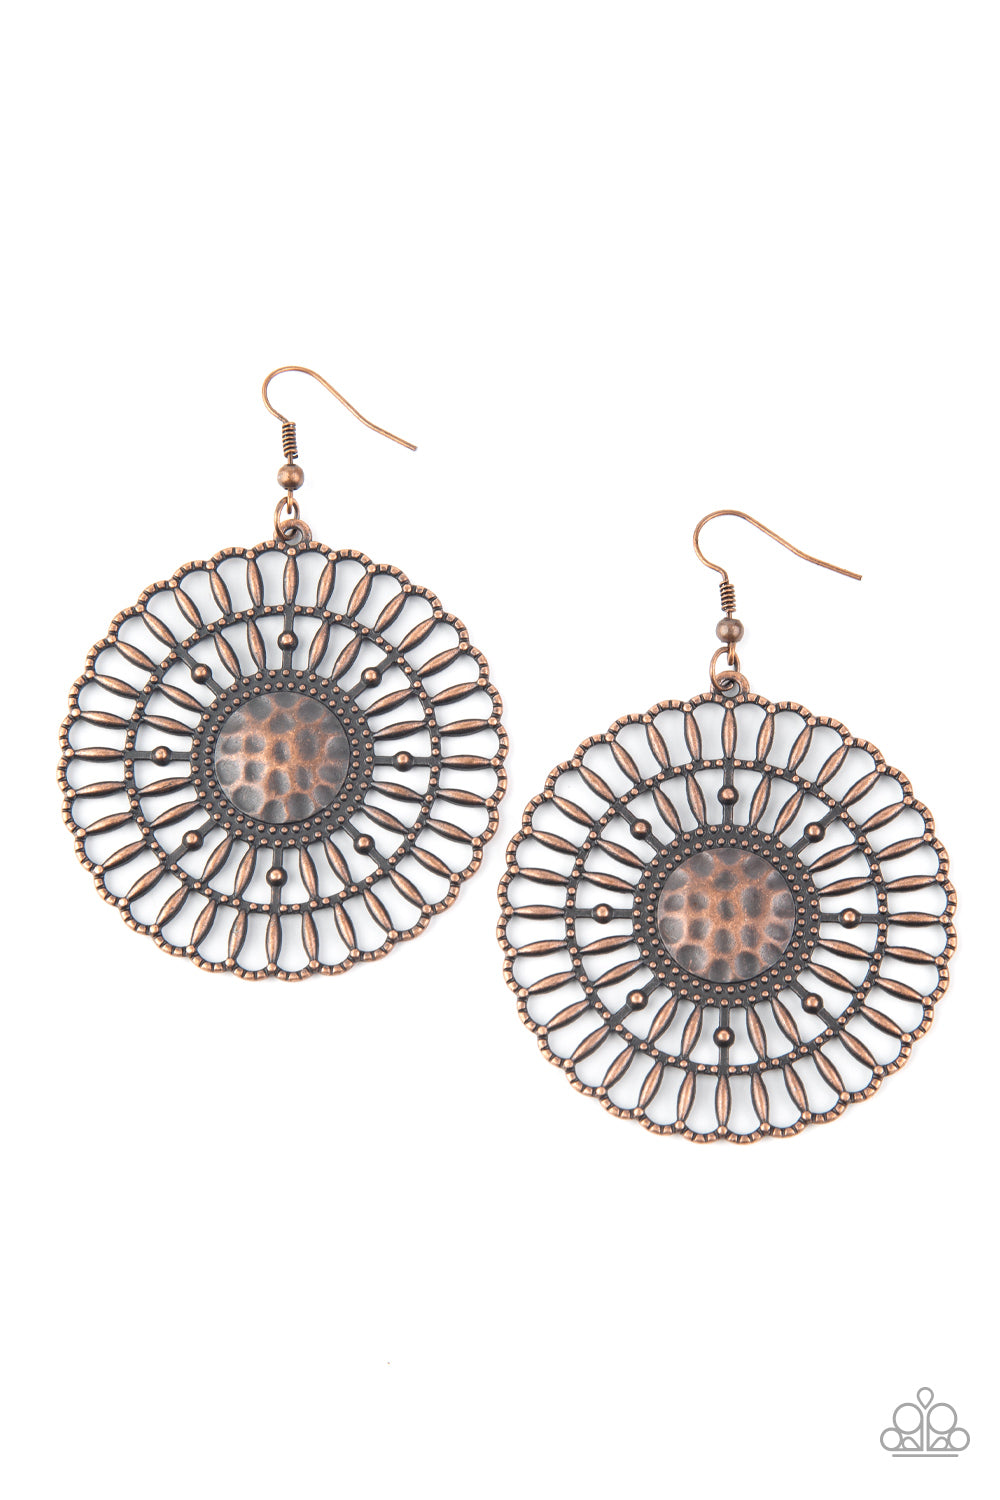 Rustic Groves - copper - Paparazzi earrings